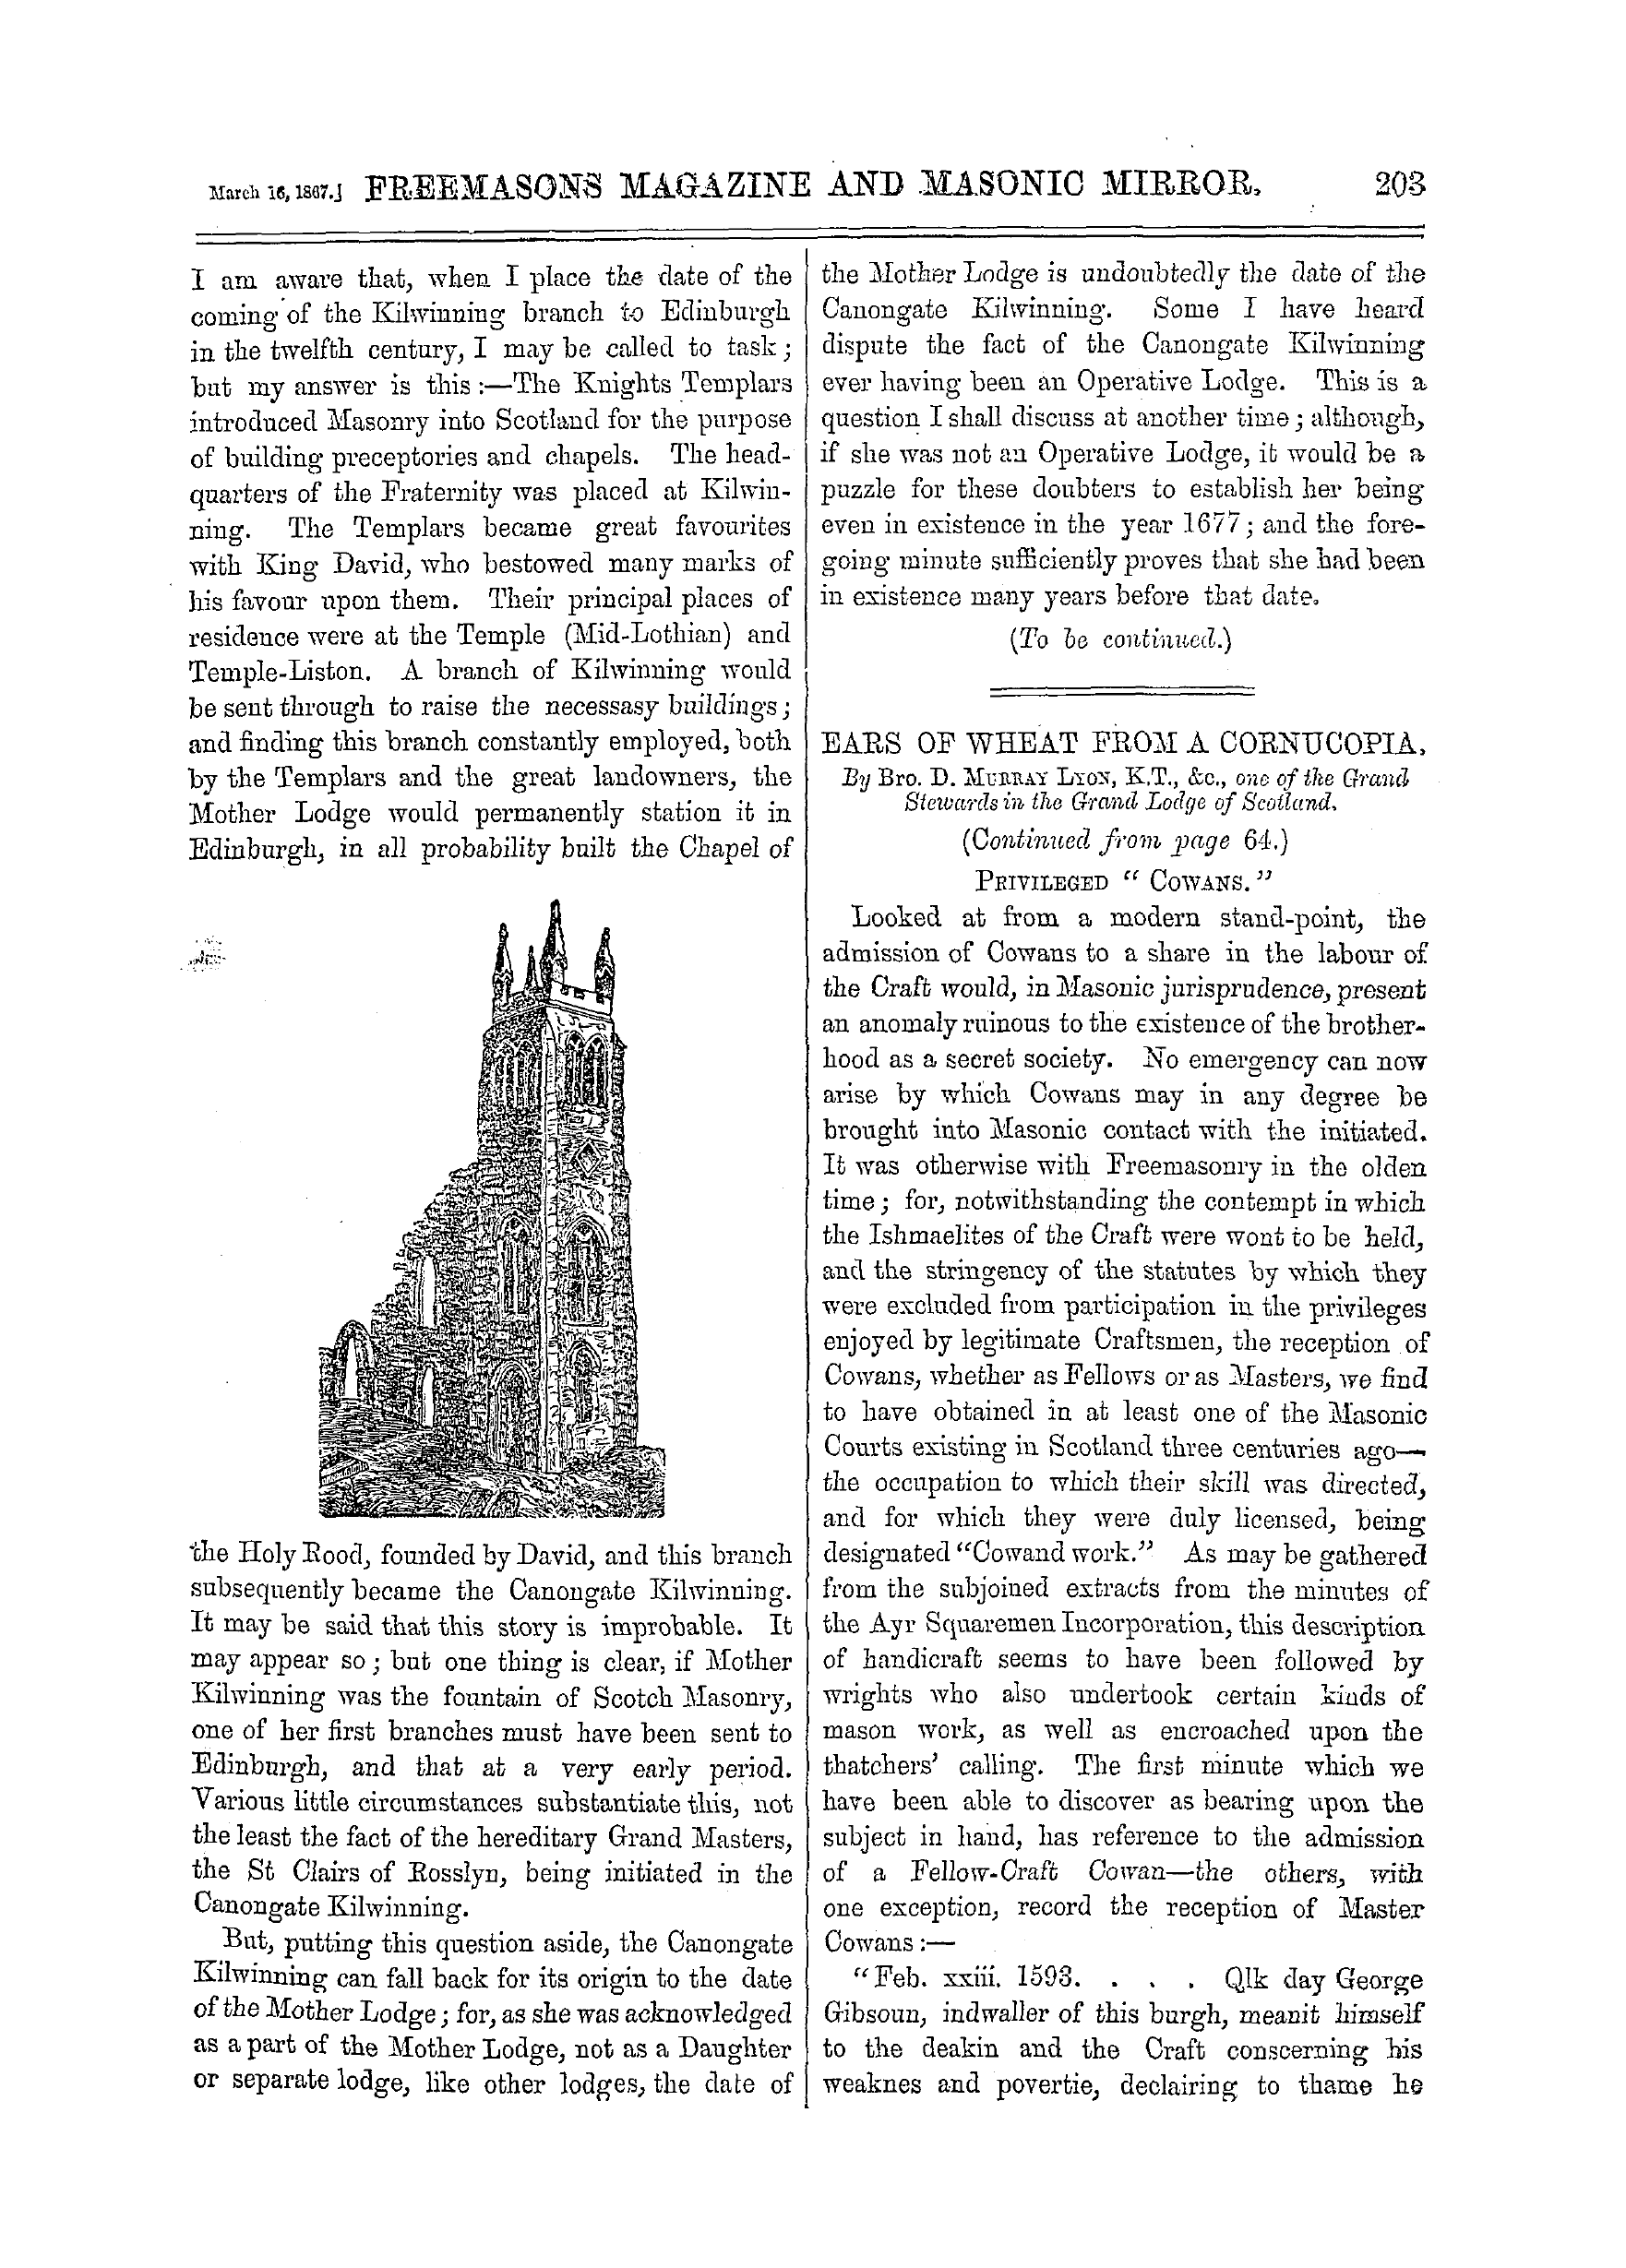 The Freemasons' Monthly Magazine: 1867-03-16 - The Canongate Kilwinning,